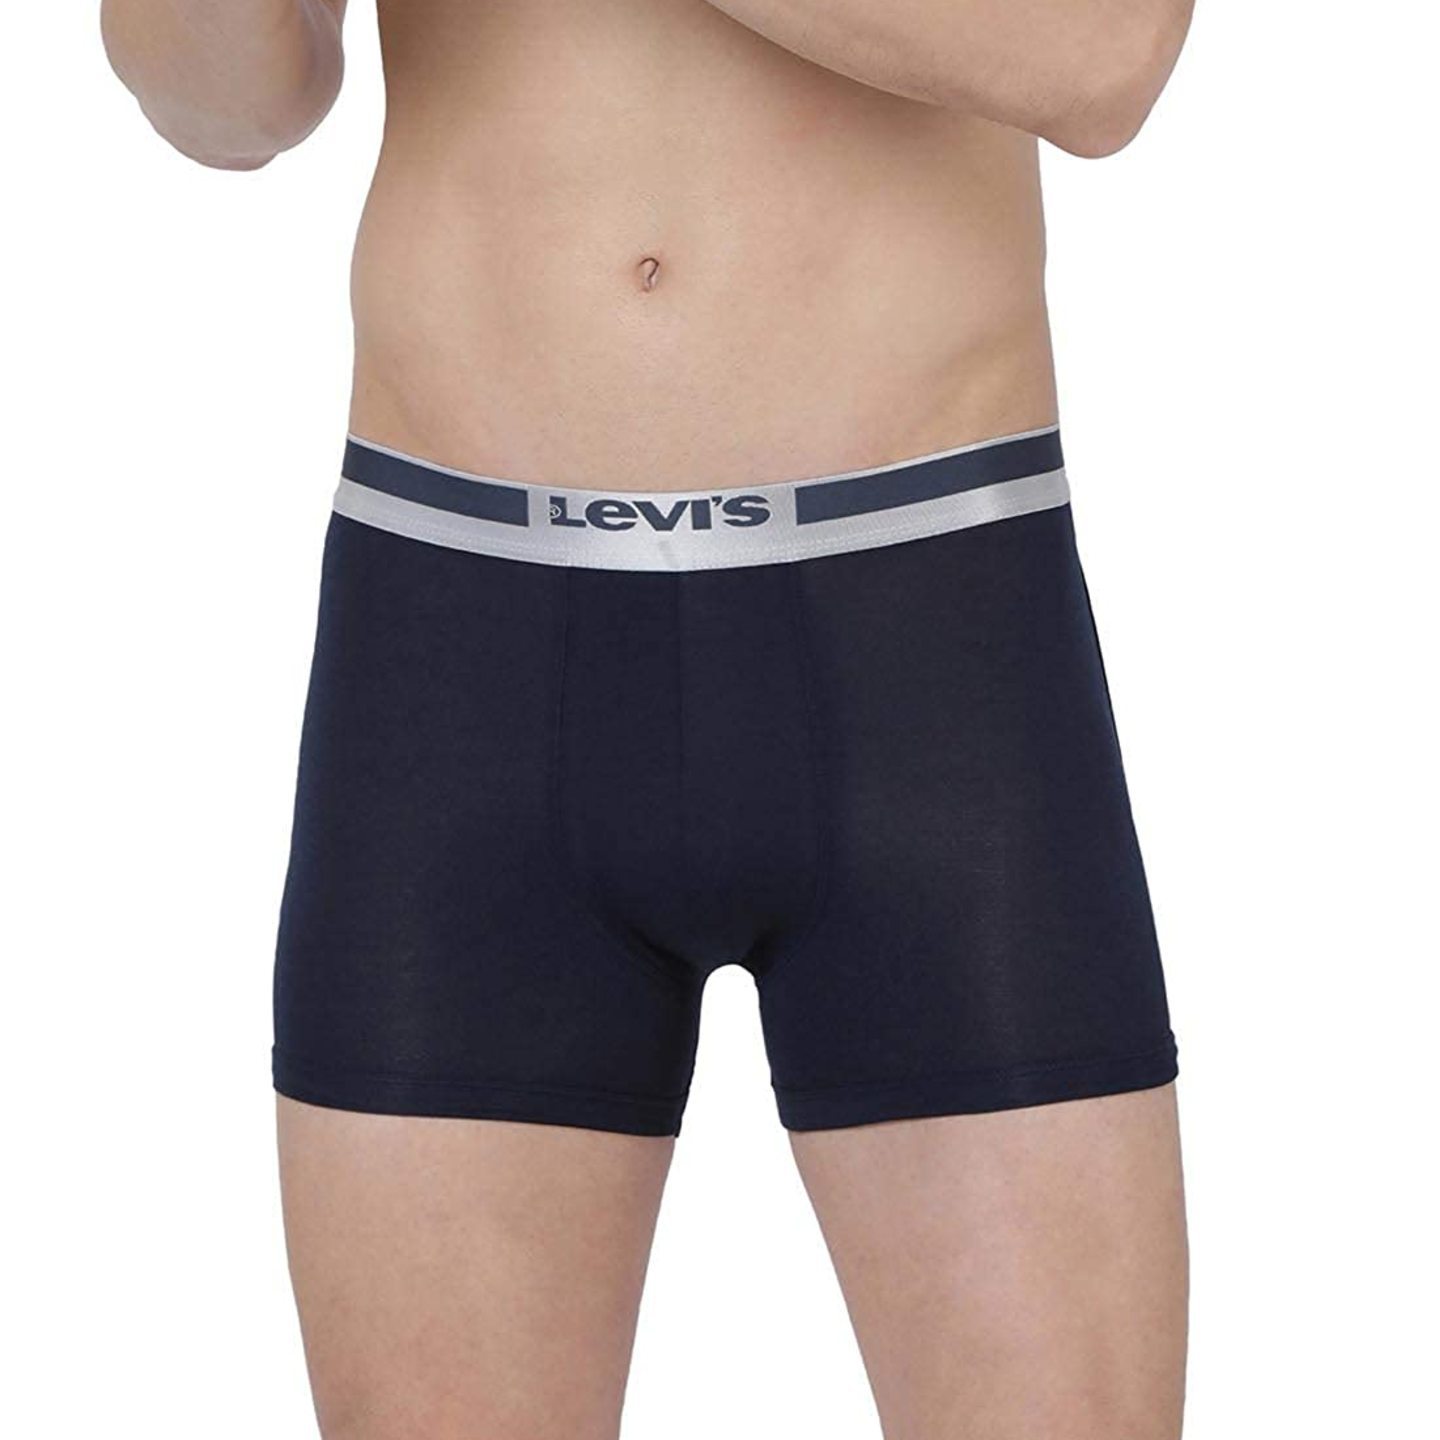 Levis Mens 100 Cotton Solid Comfort Trunks Snug Fit